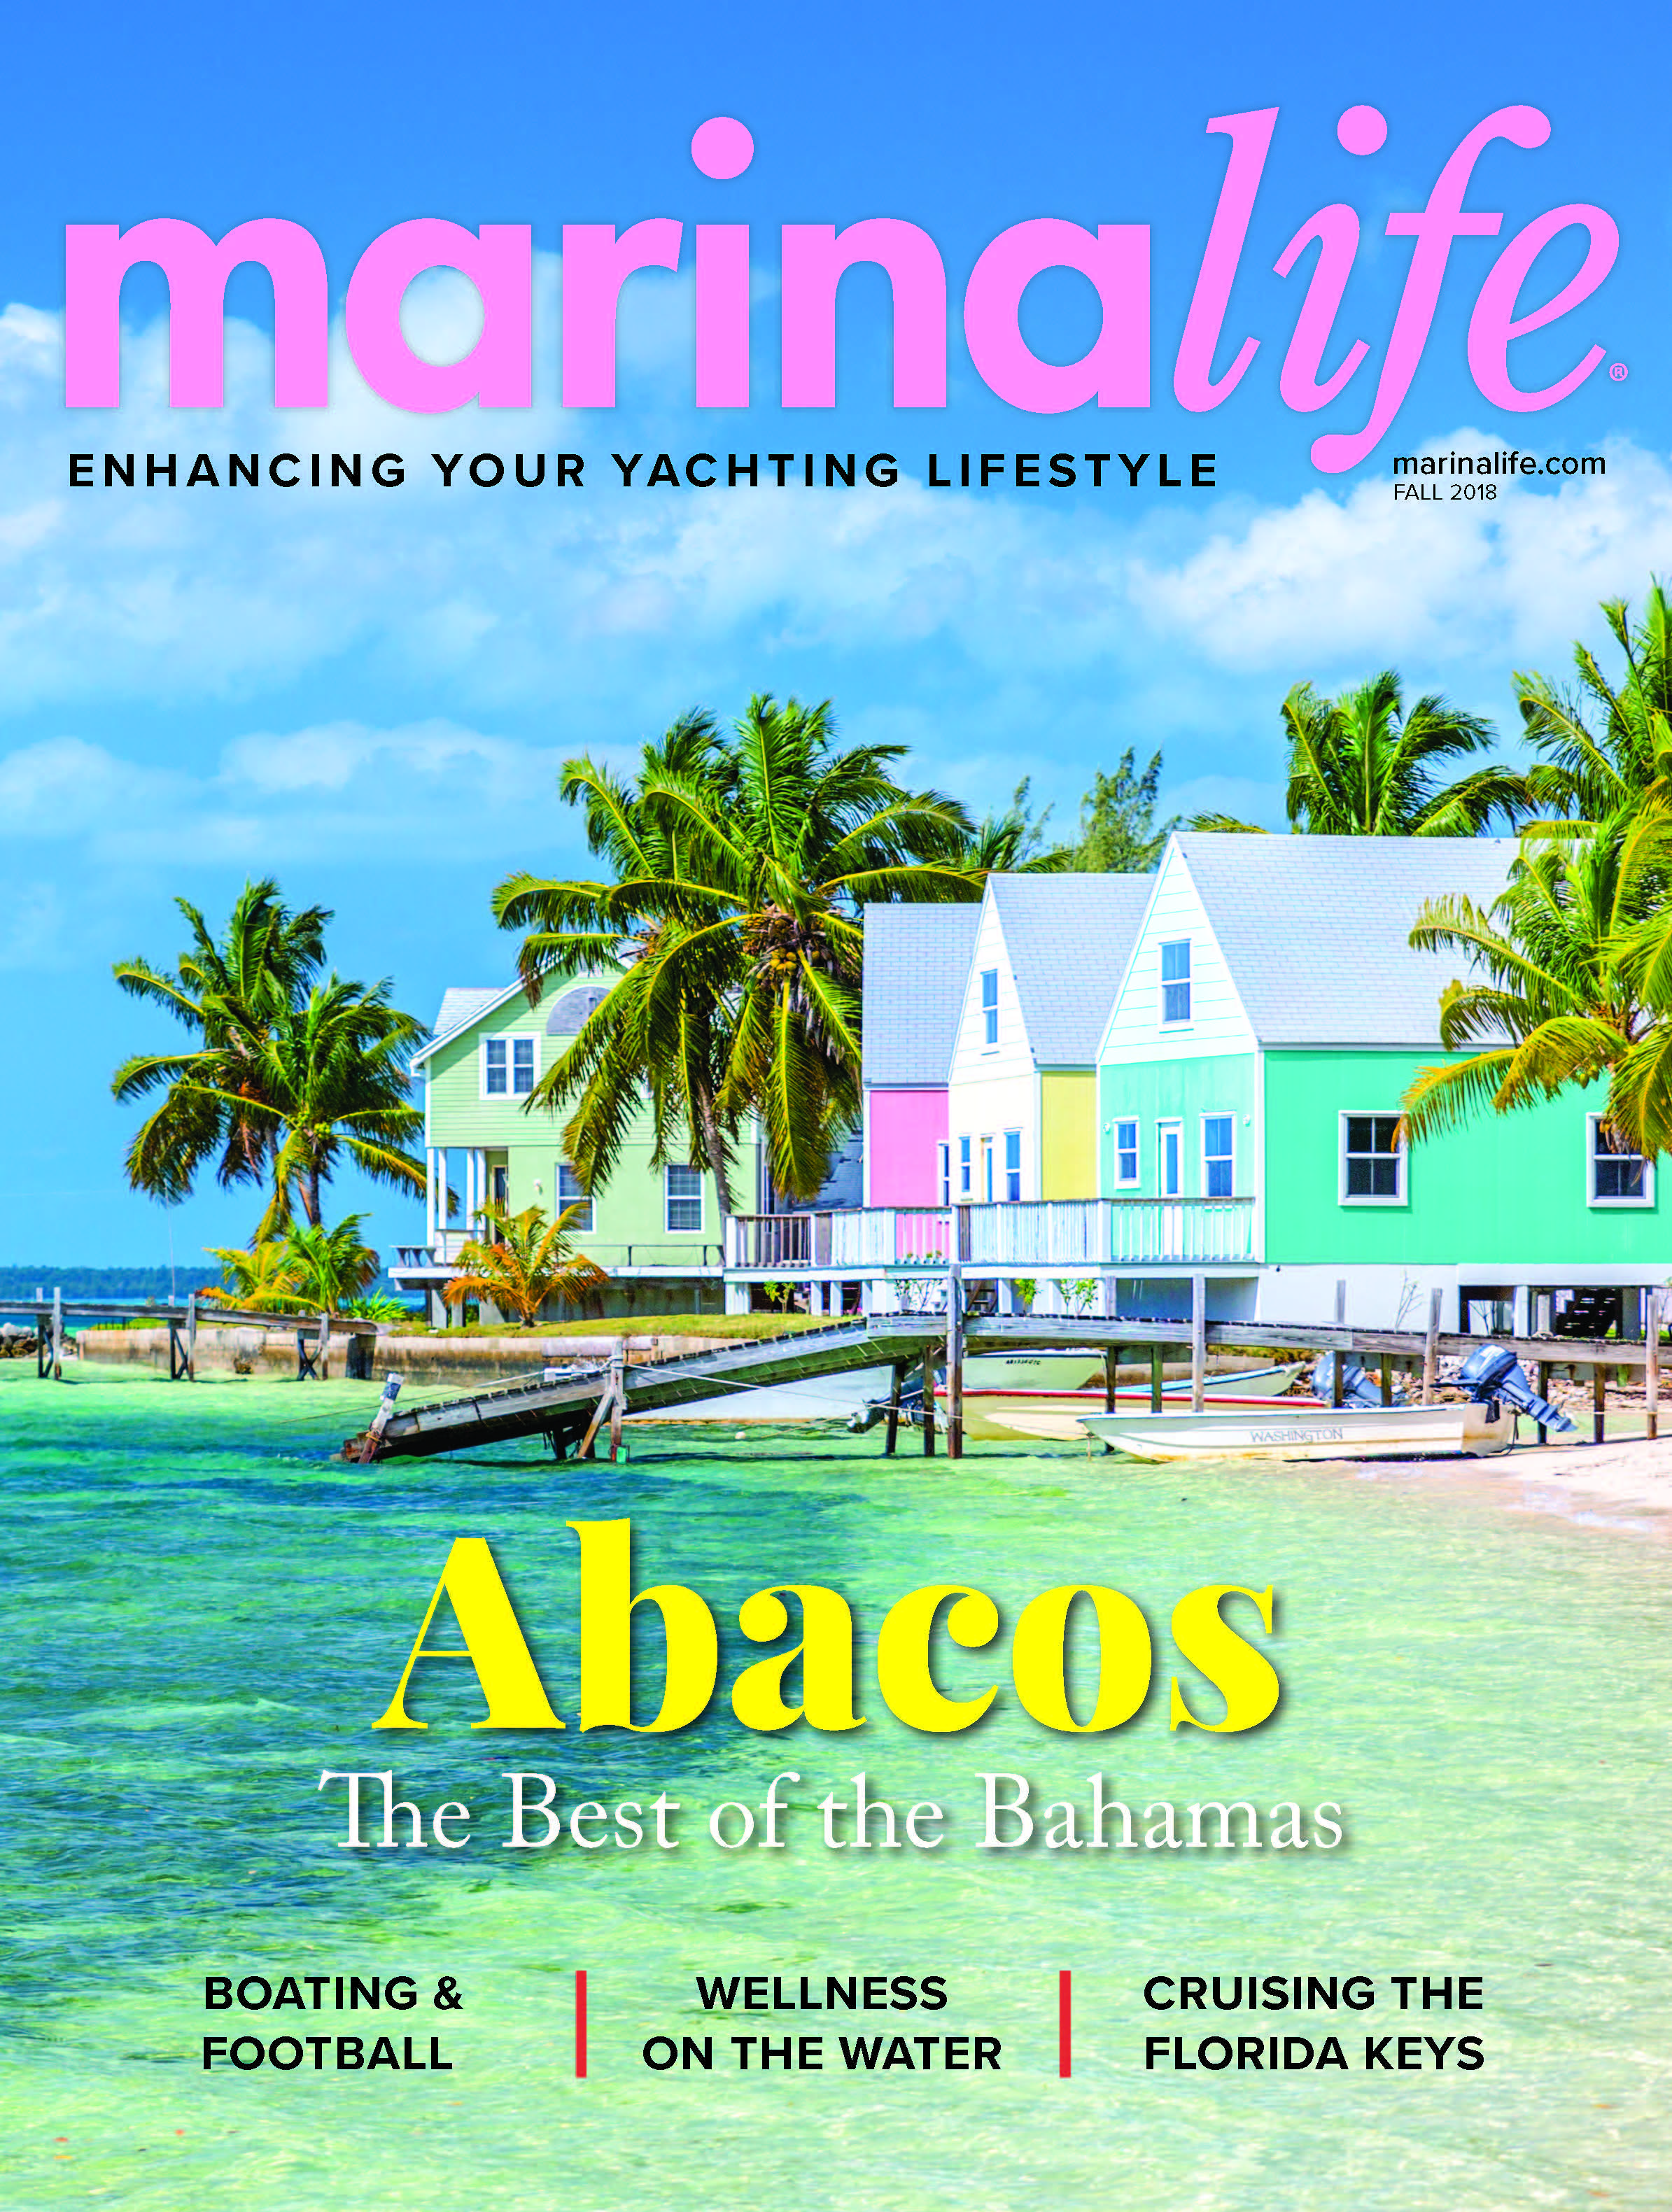 Marinalife Fall 2018 Magazine Issue - Abacos: The Best of the Bahamas